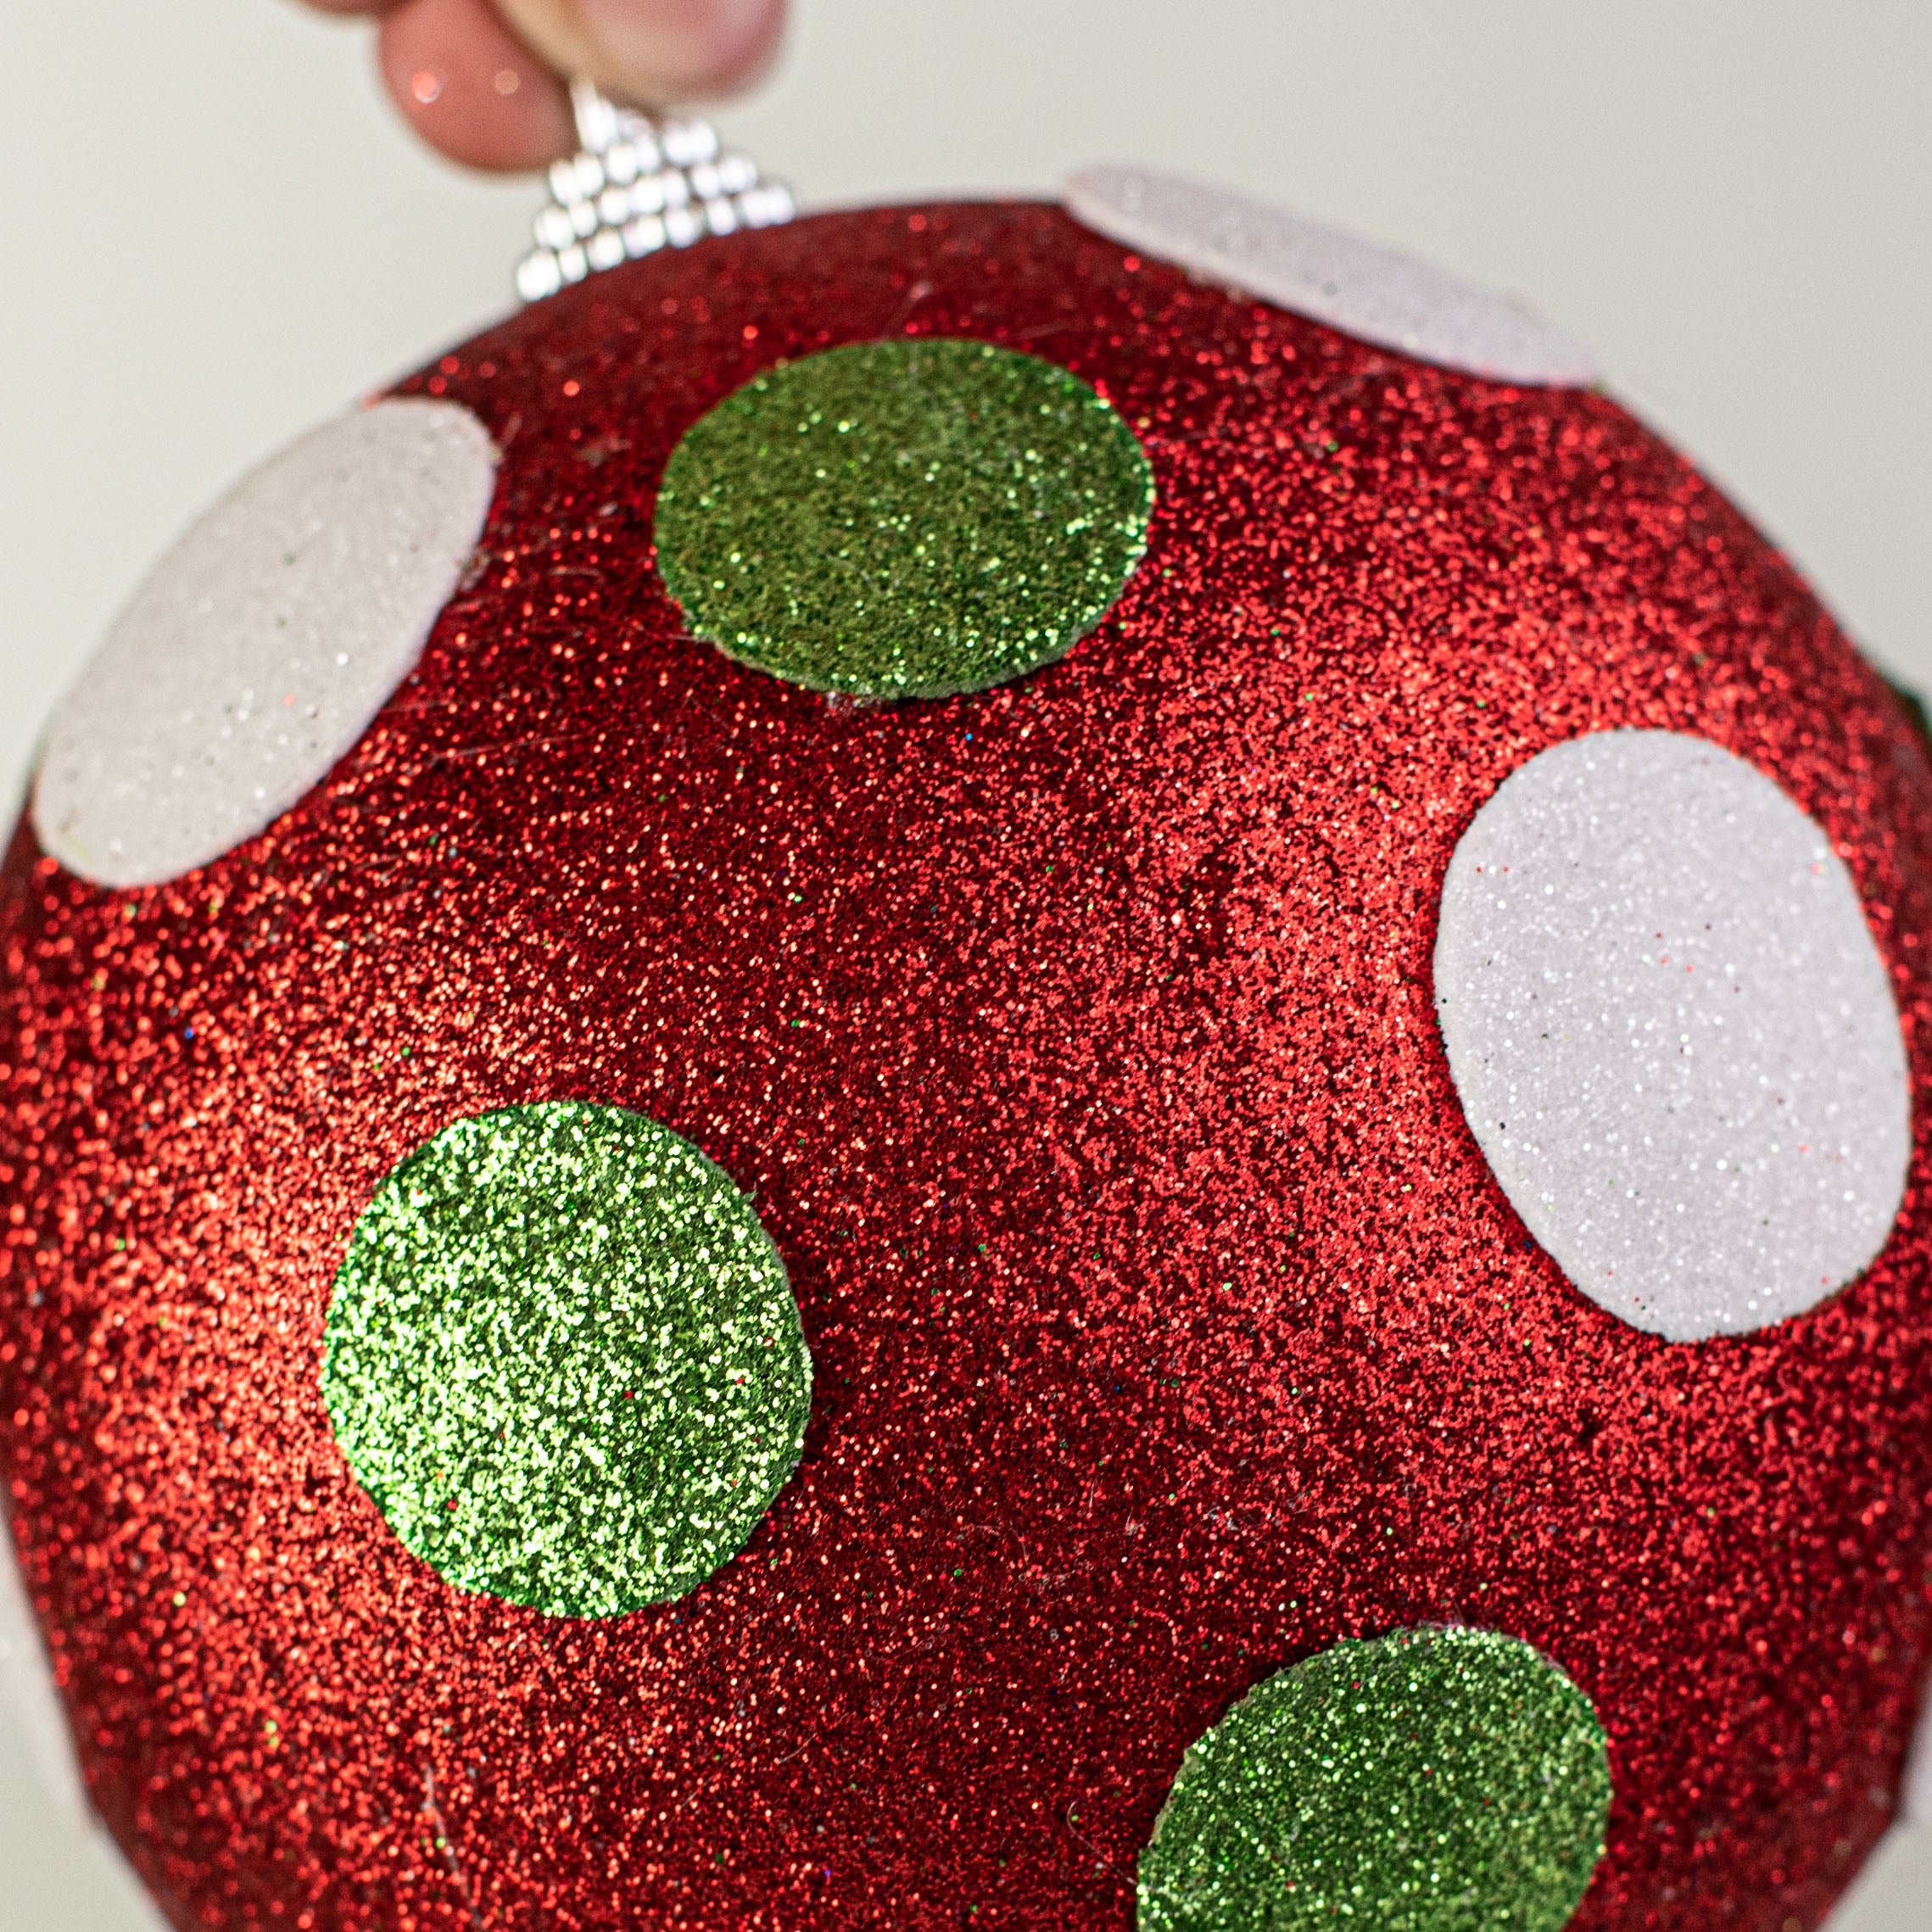 5" Polka Dot Ball Ornament: Red, Lime, White